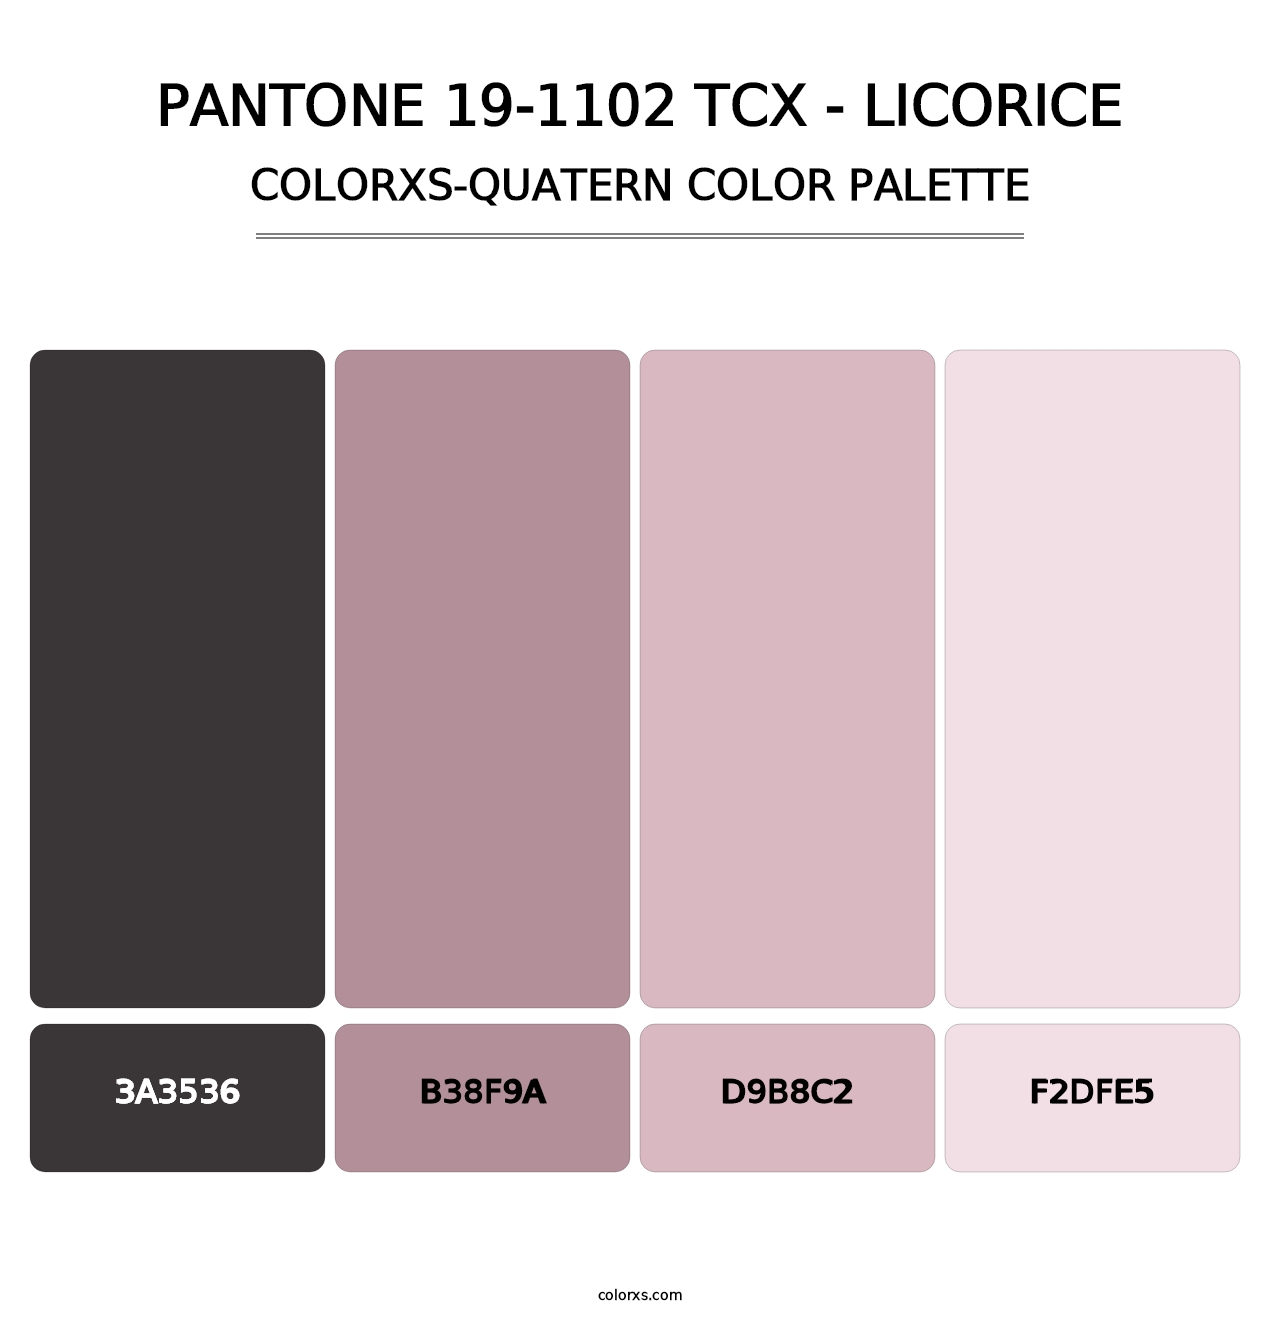 PANTONE 19-1102 TCX - Licorice - Colorxs Quatern Palette